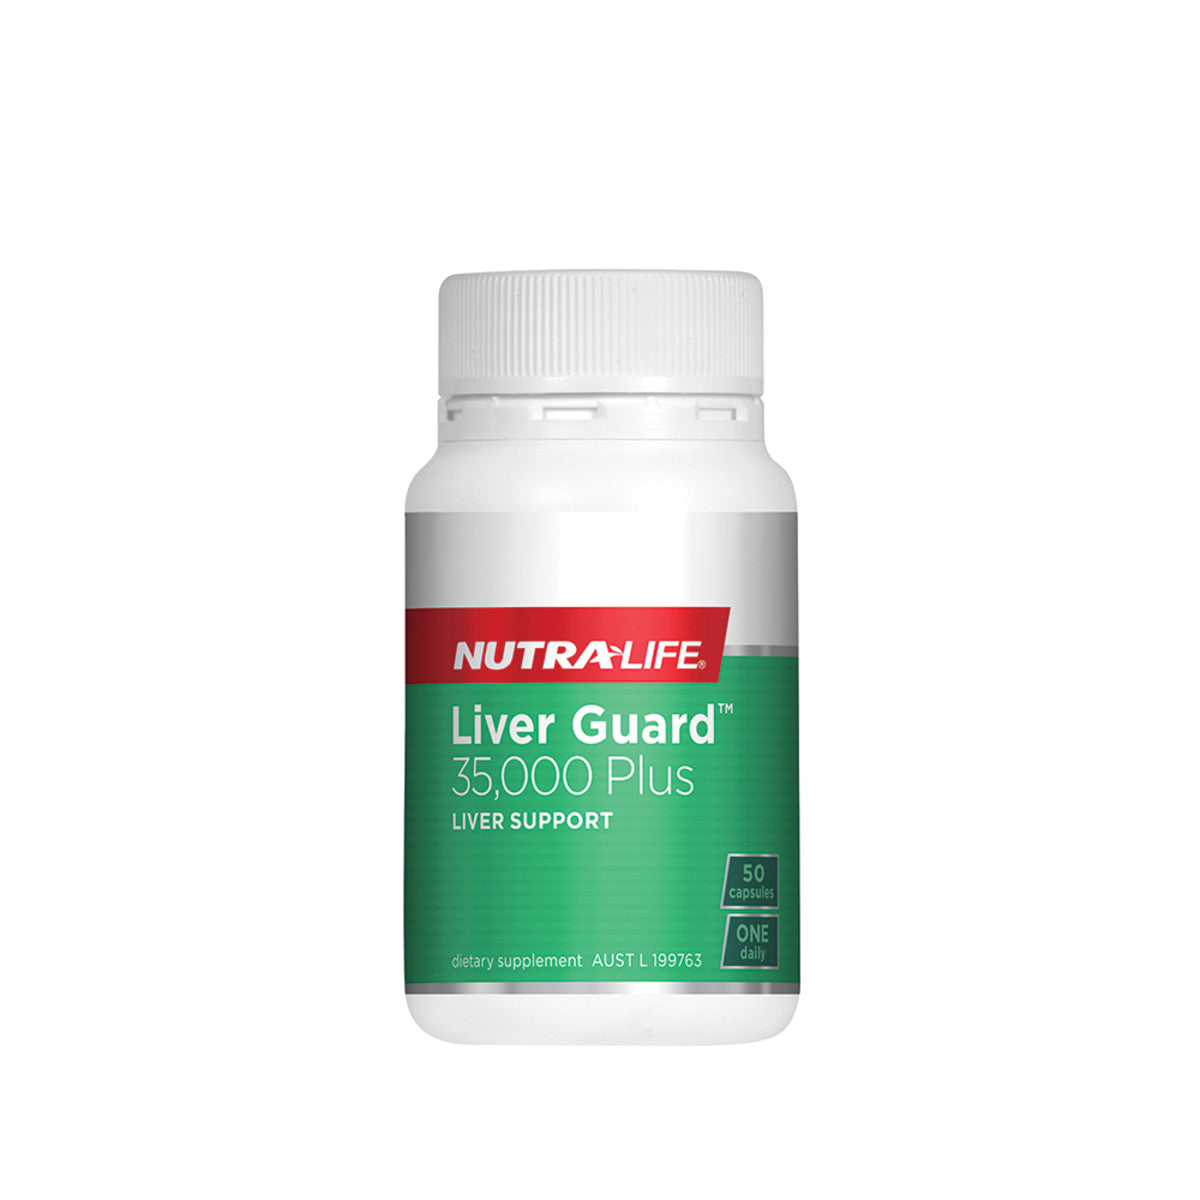 NutraLife - Liver Guard 35,000 Plus